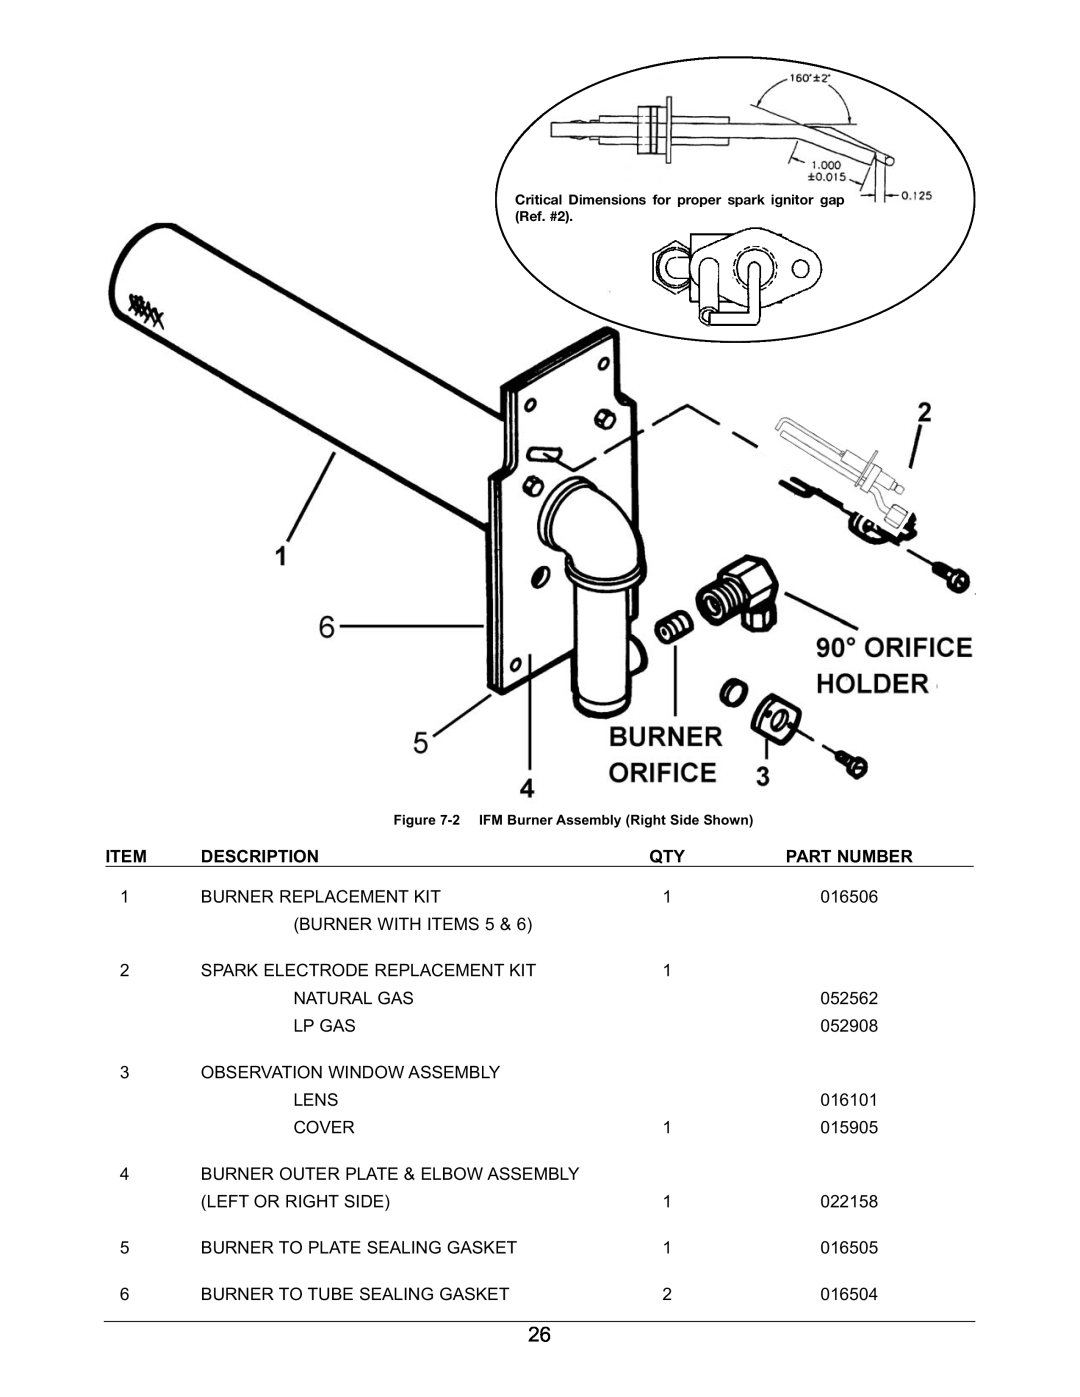 Keating Of Chicago 2006 warranty Description, Part Number, Burner Replacement Kit 